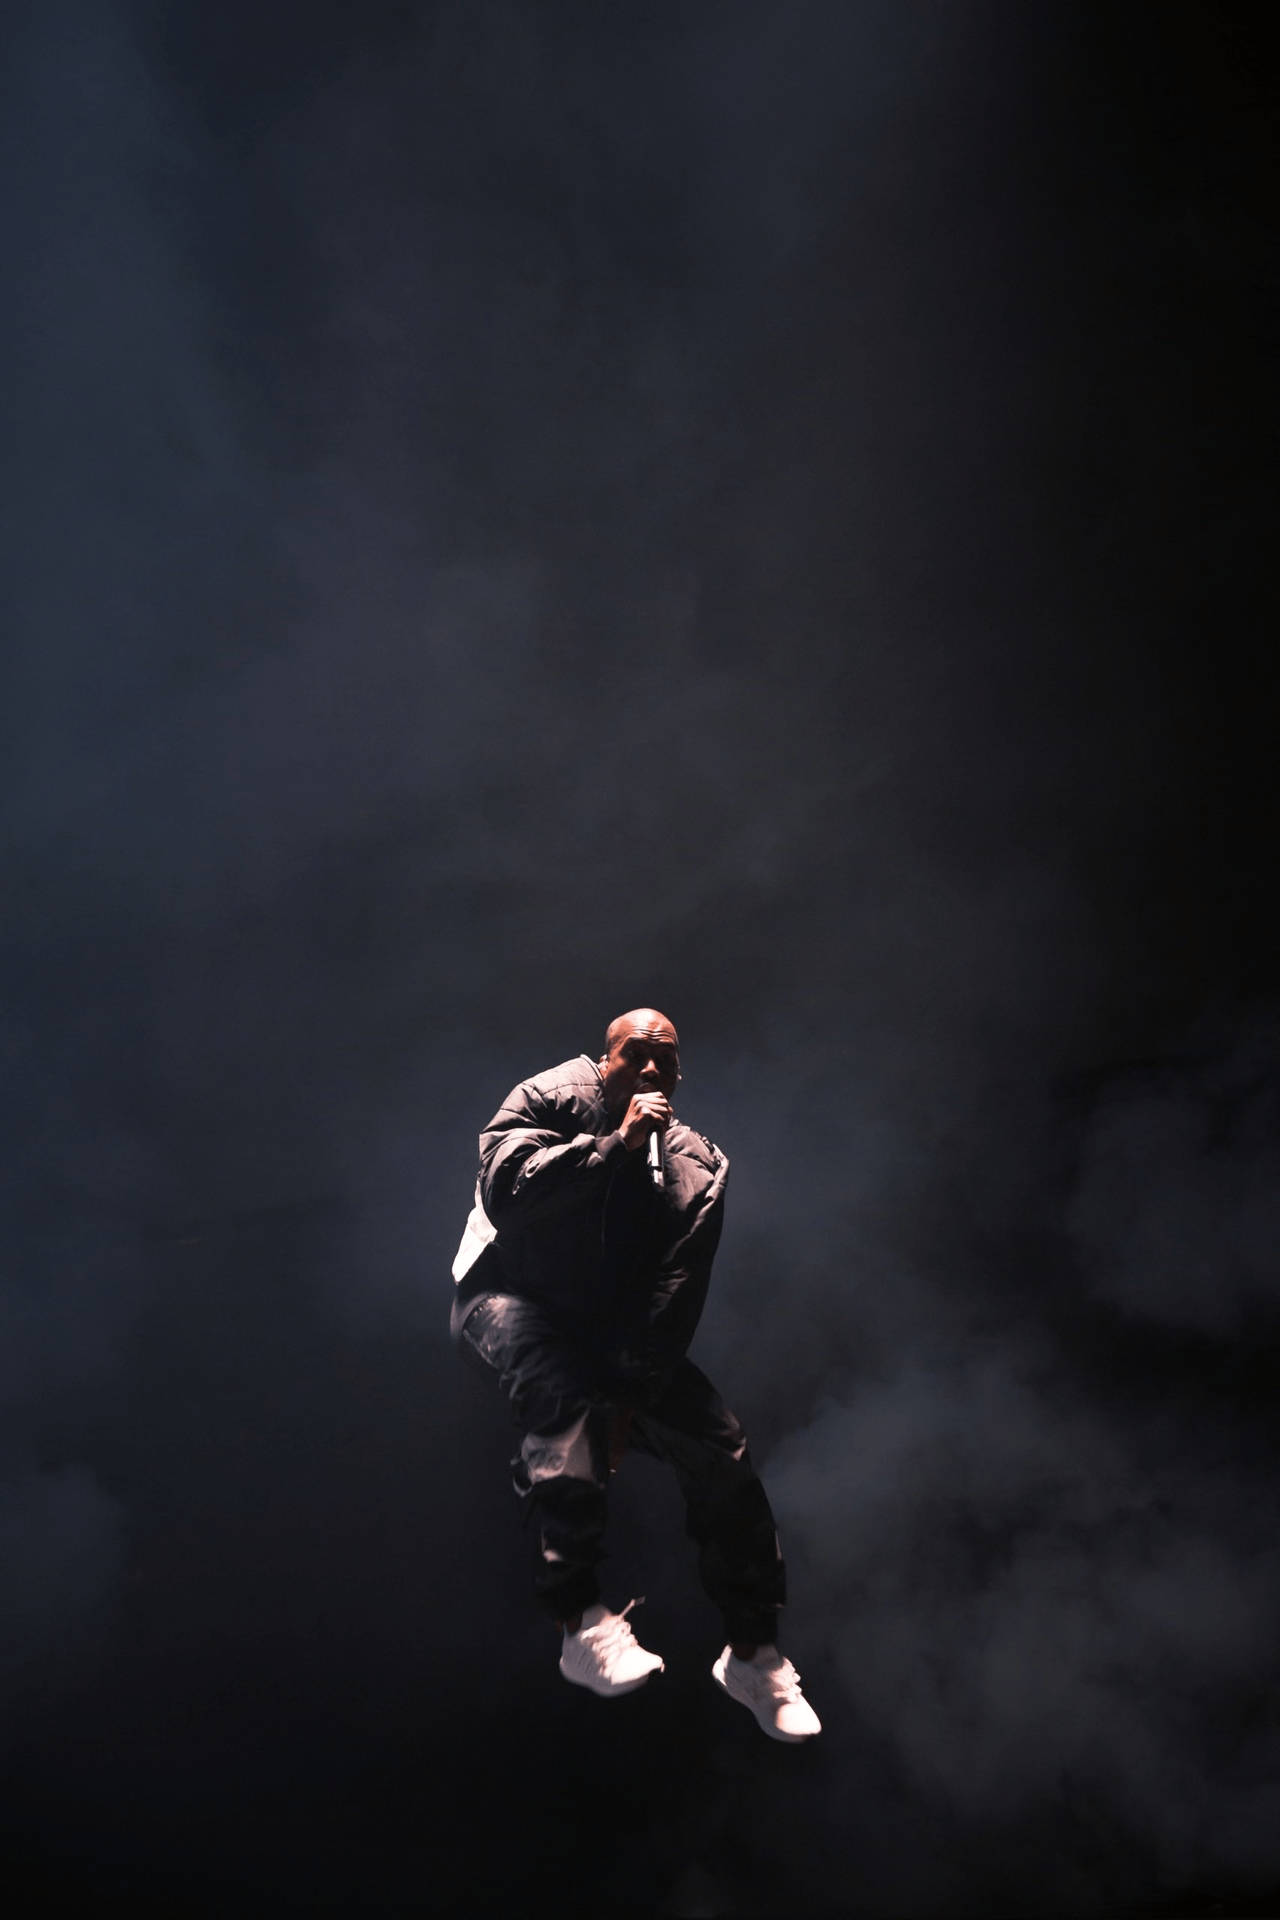 Kanye West Jumping Midair Background